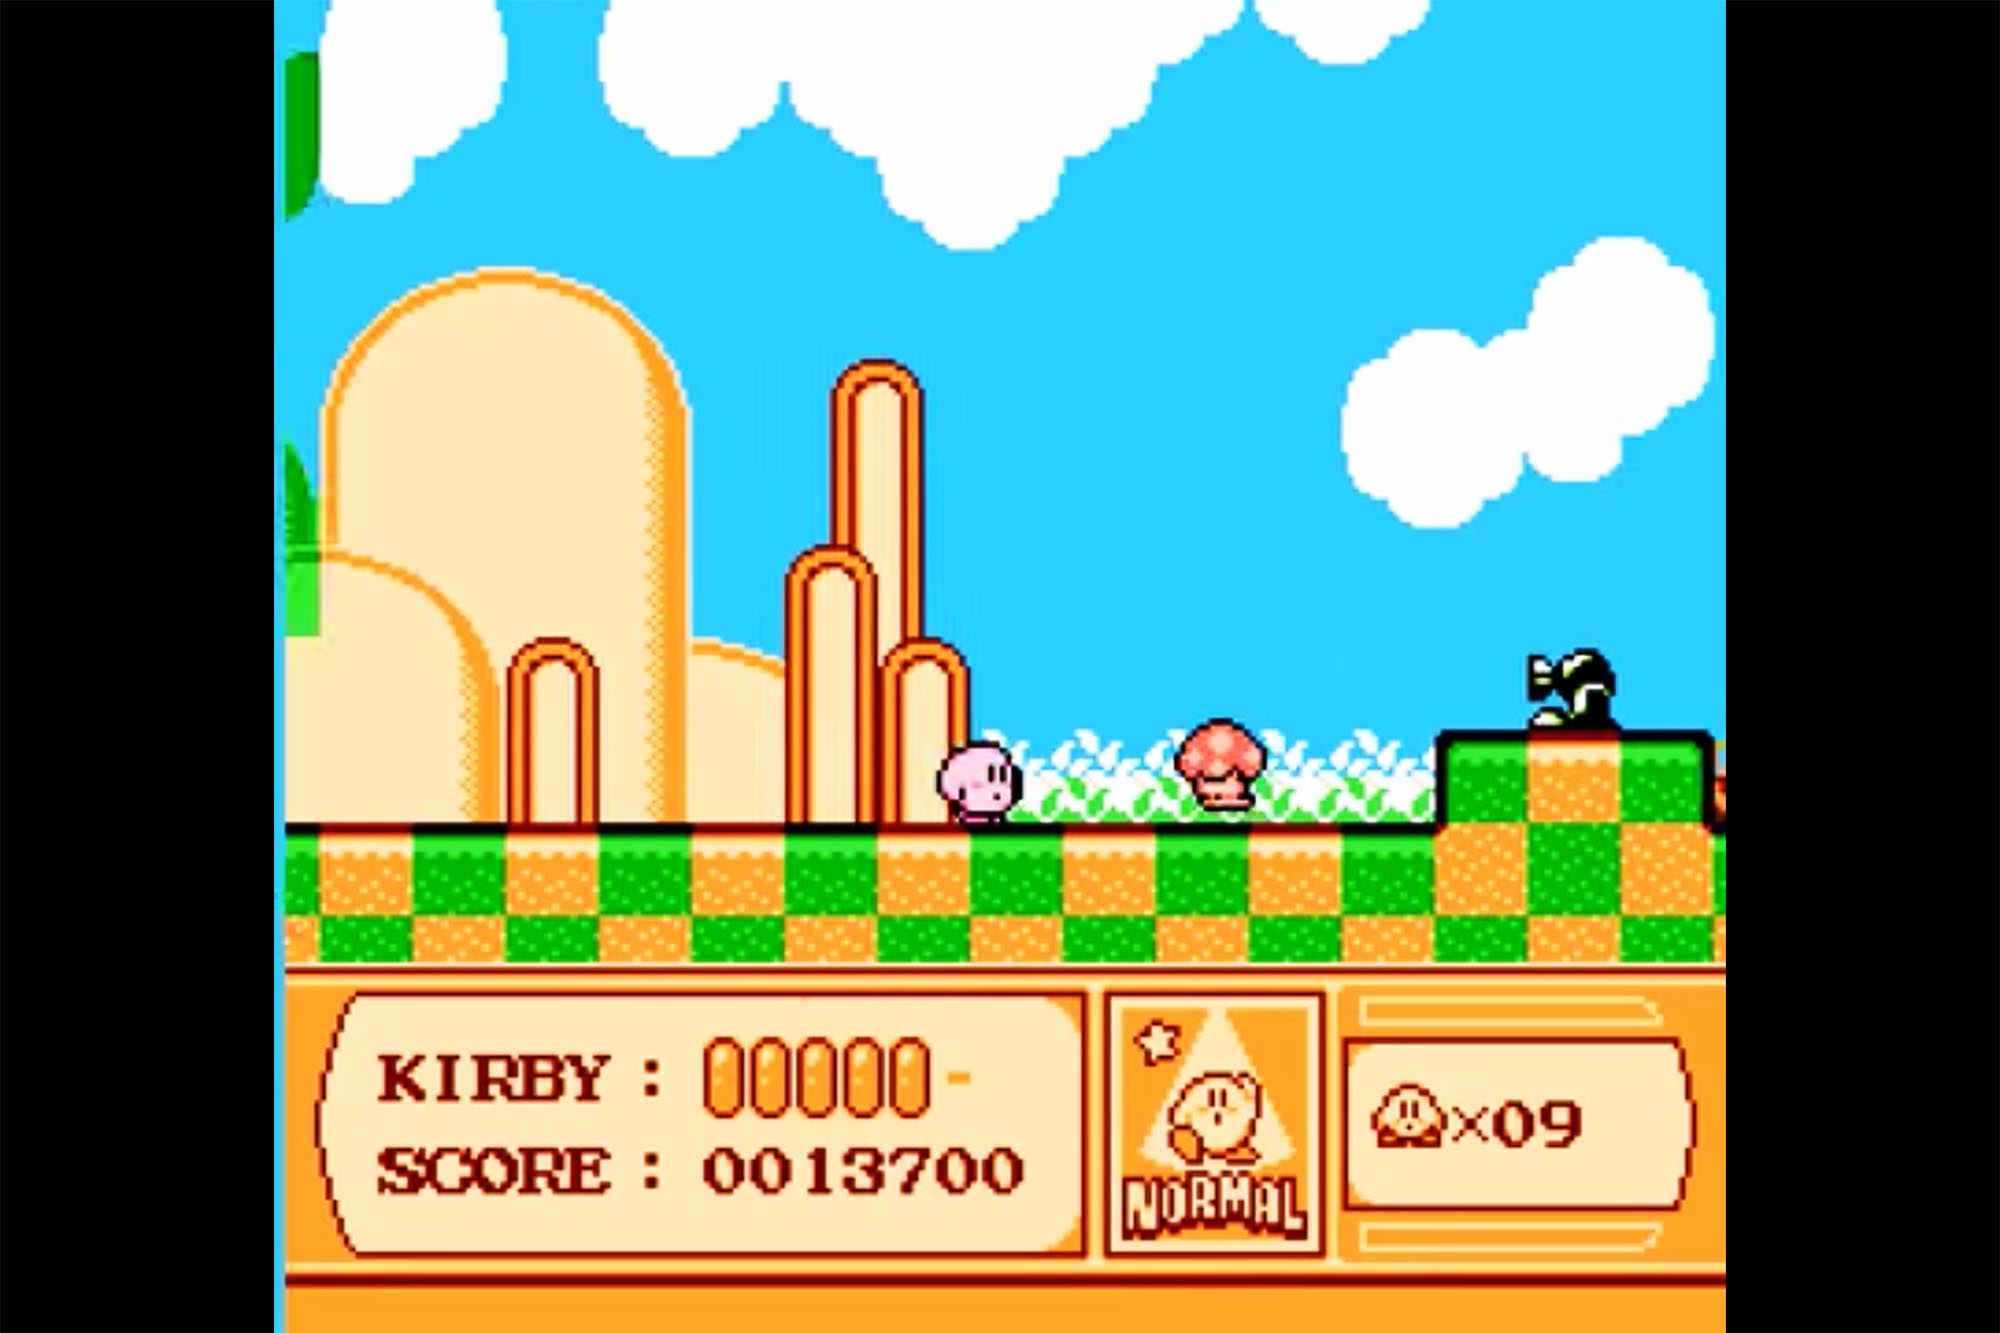 Kirby's Adventure Game on Nintendo NES